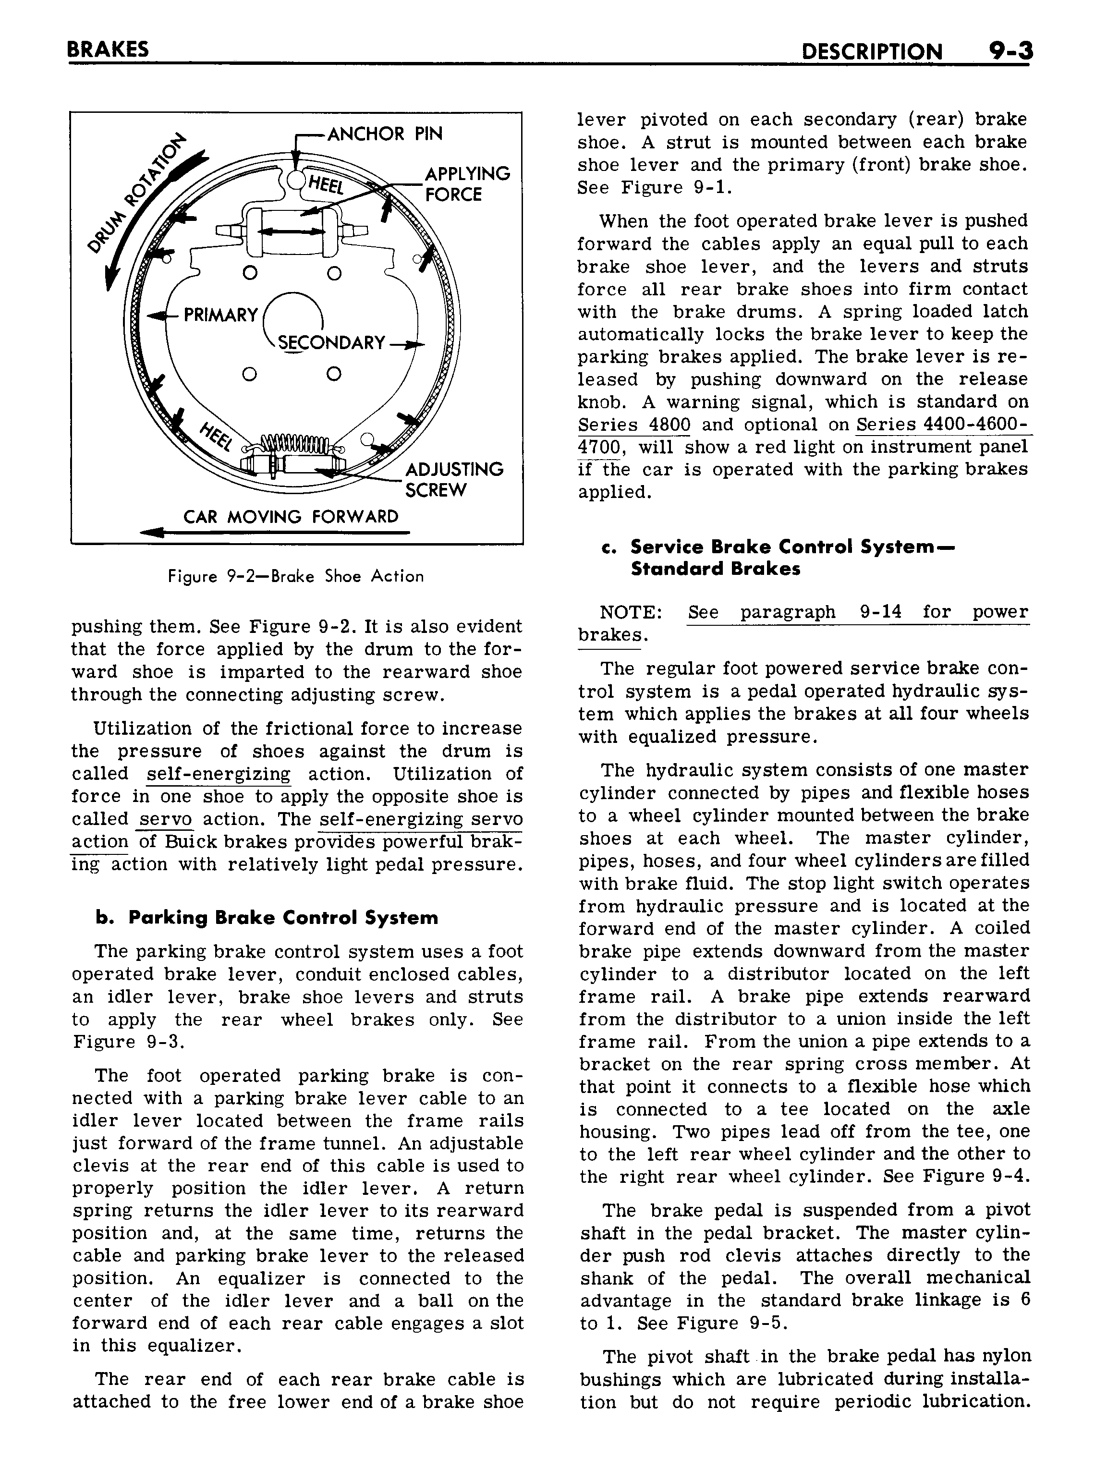 n_09 1961 Buick Shop Manual - Brakes-003-003.jpg